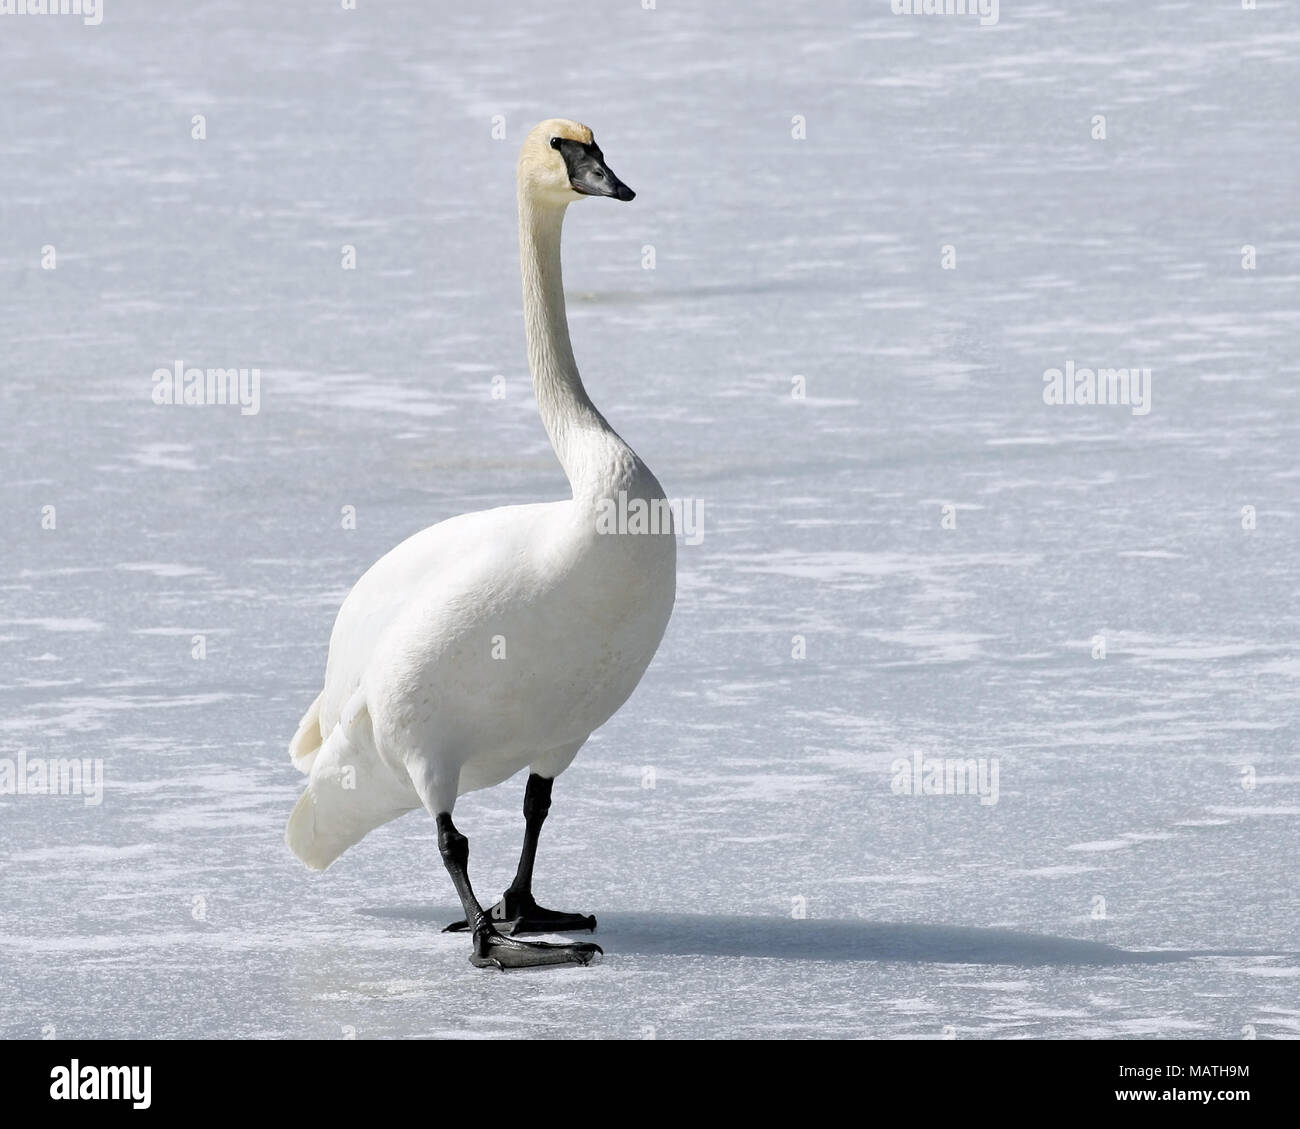 Wild Trumpeter Swan with its distinctive black beak walks across frozen snow covered pond Stock Photo